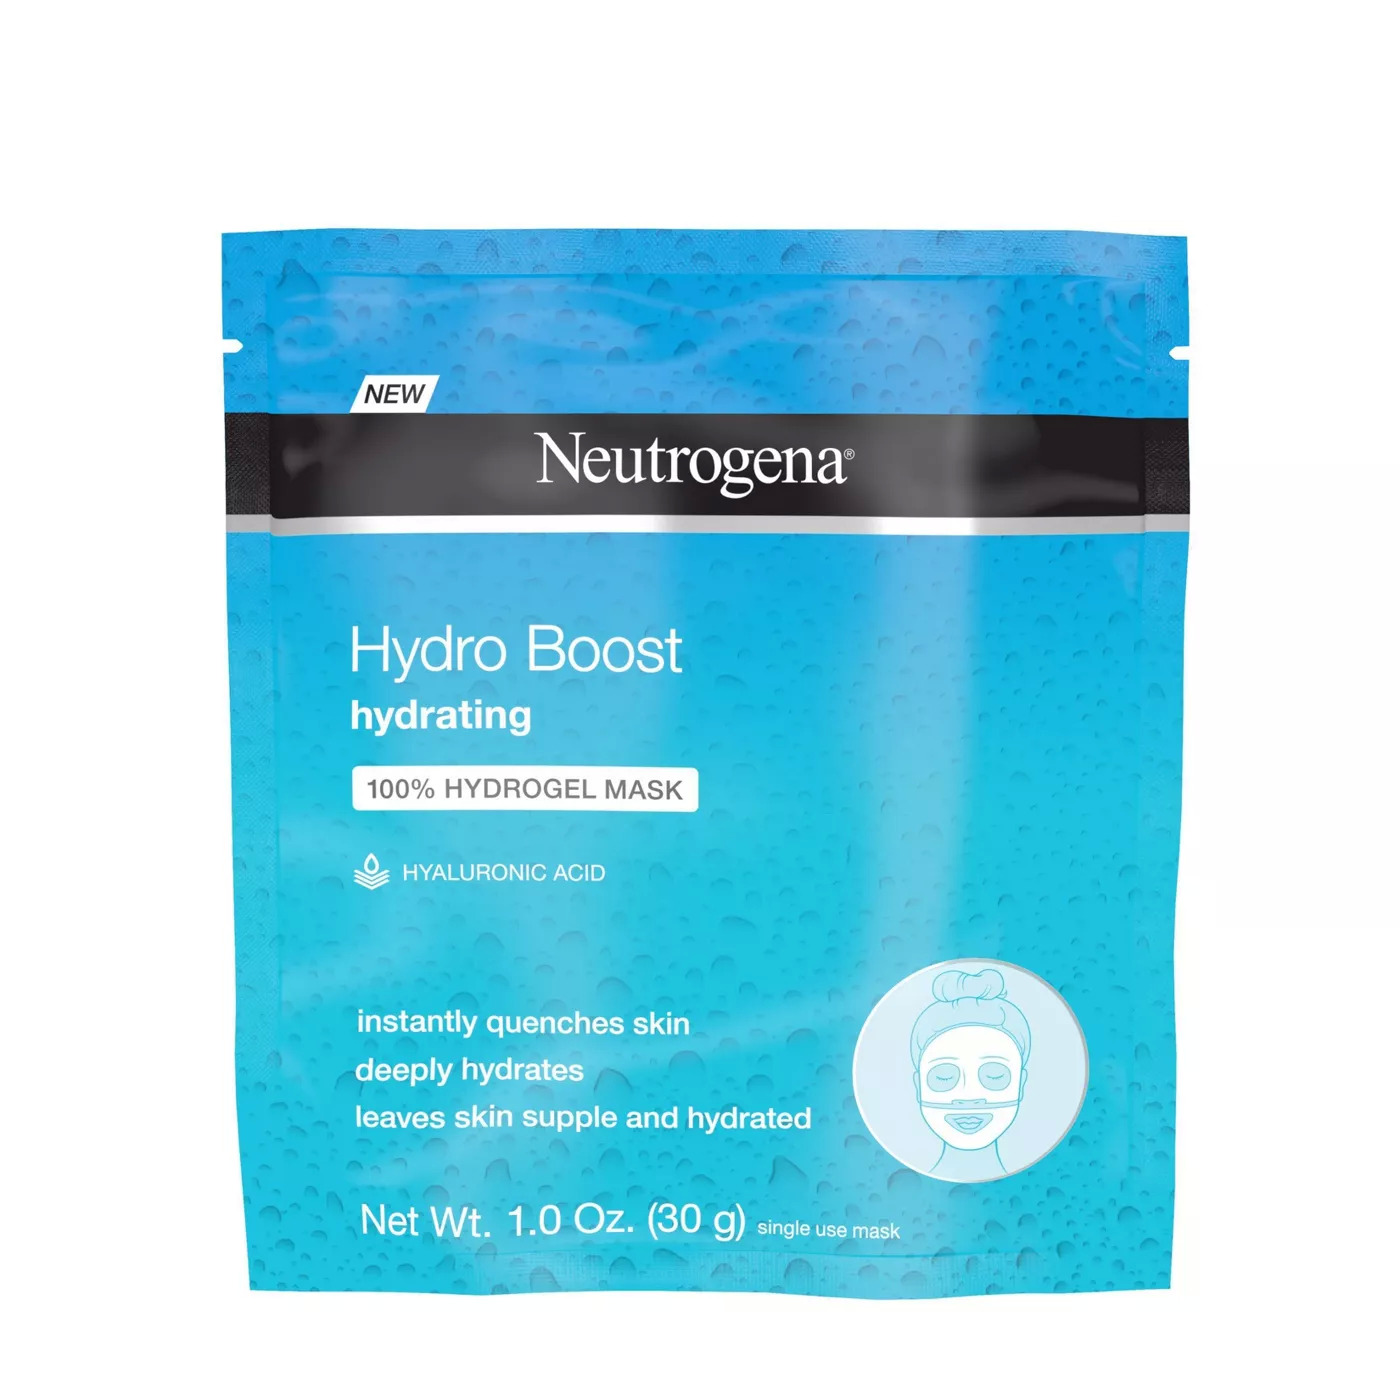 Neutrogena Moisturizing Hydro Boost Hydrating Face Mask (1oz) - $2.69